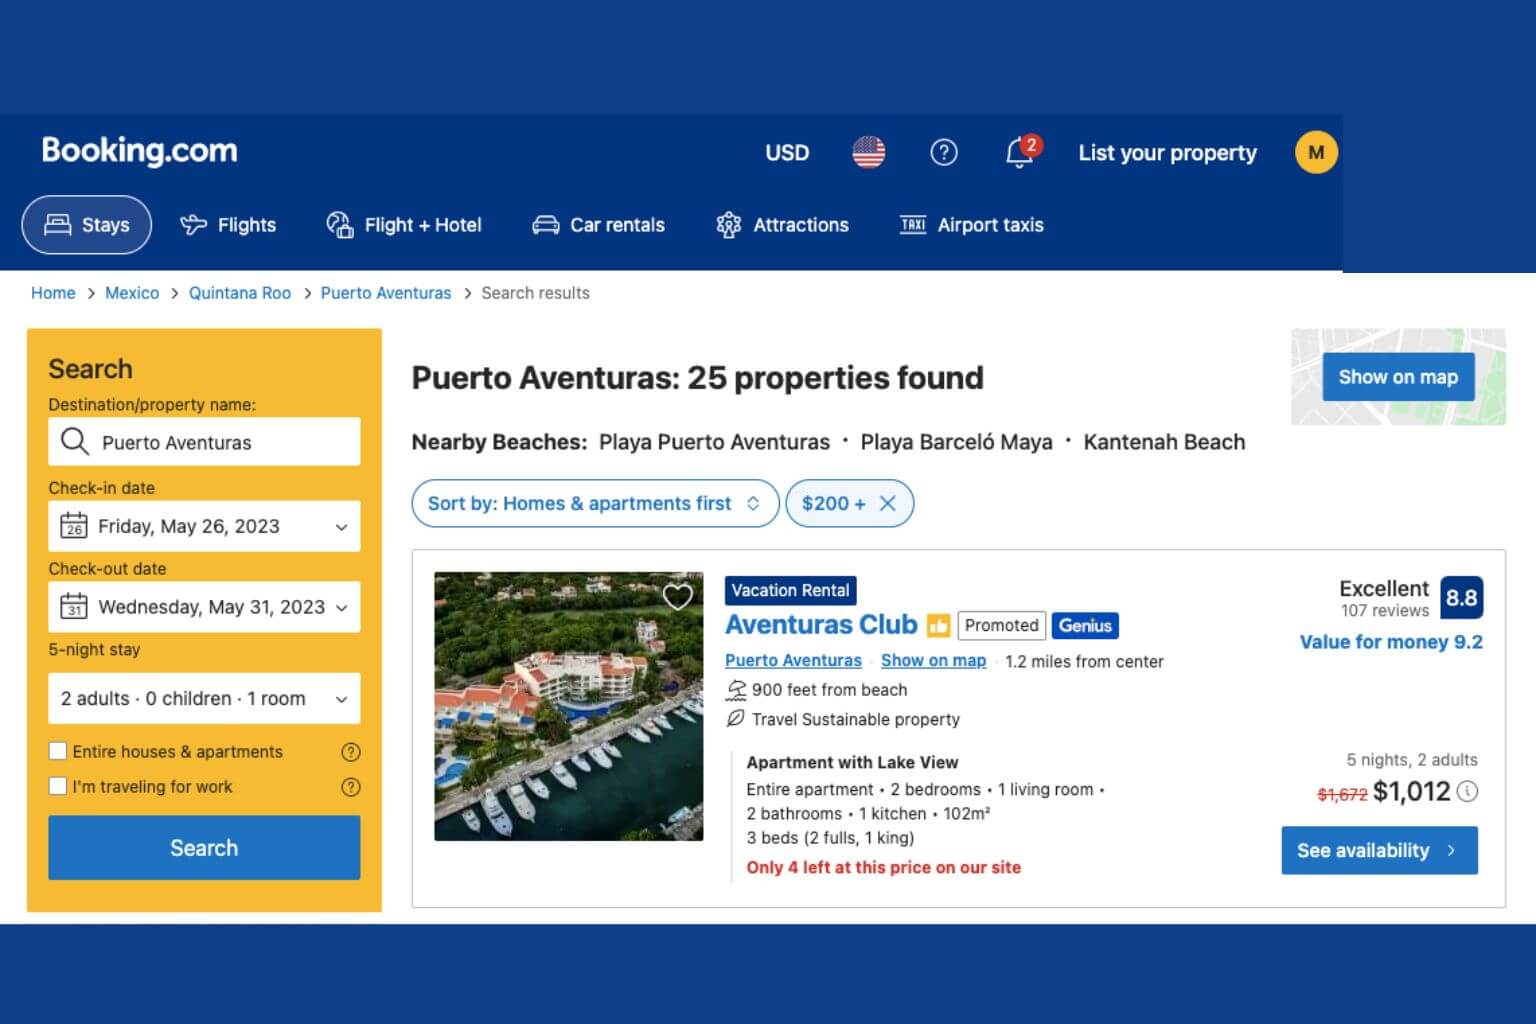 Booking.com vacation rental platform